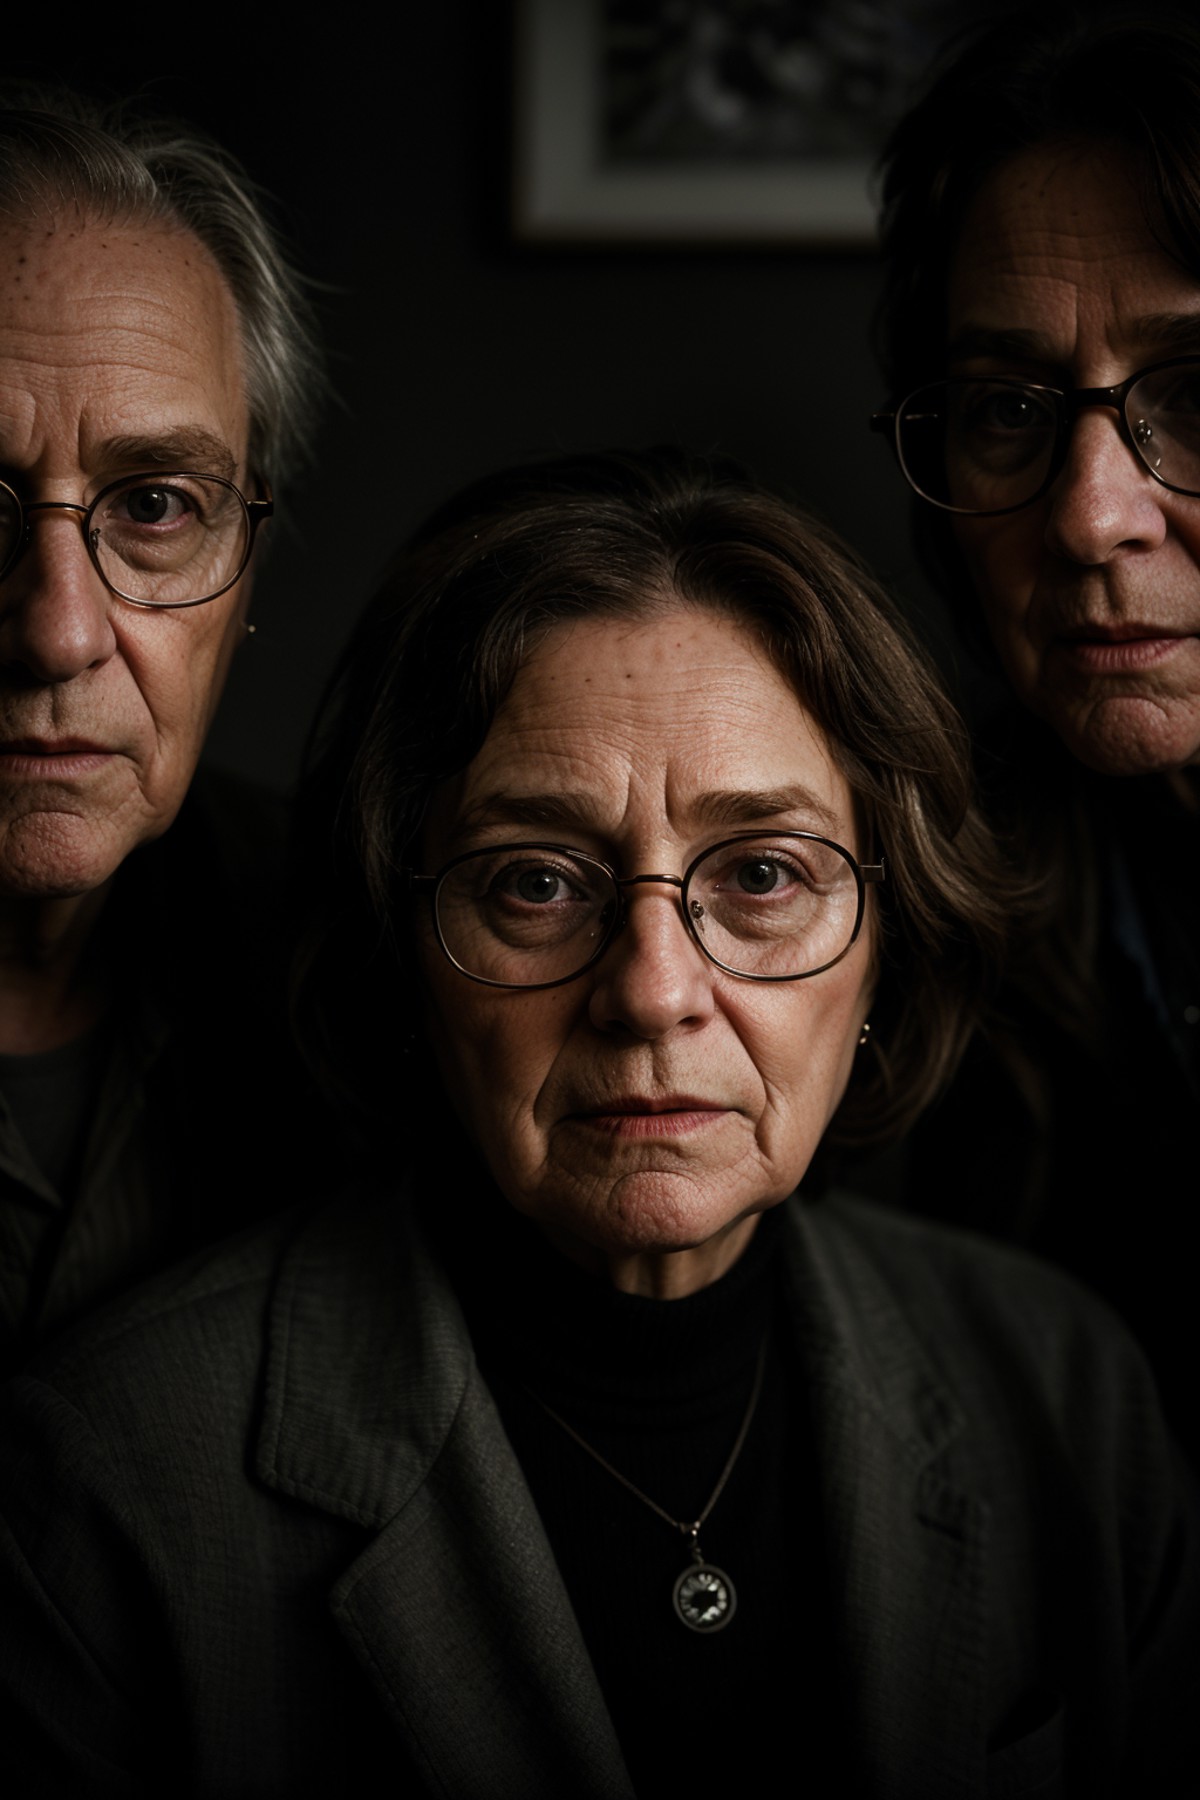 photo, portrait of old people, glasses, dimly lit, harsh camera